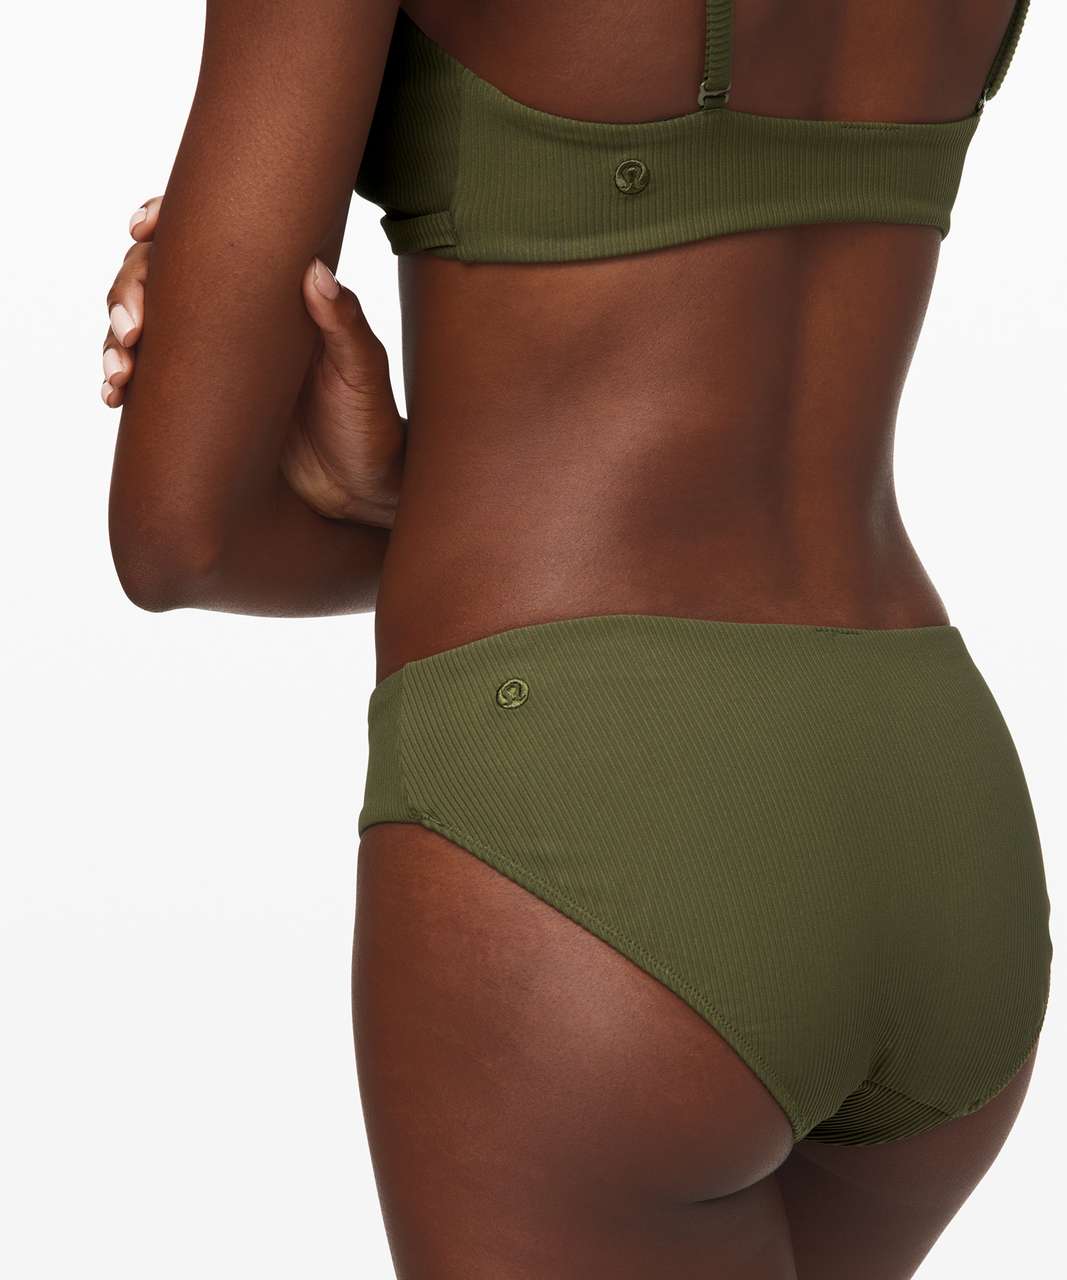 Lululemon InvisiWear Mid Rise Bikini Underwear NWT Green Camo (Size XL)  Unopened for Sale in Chicago, IL - OfferUp